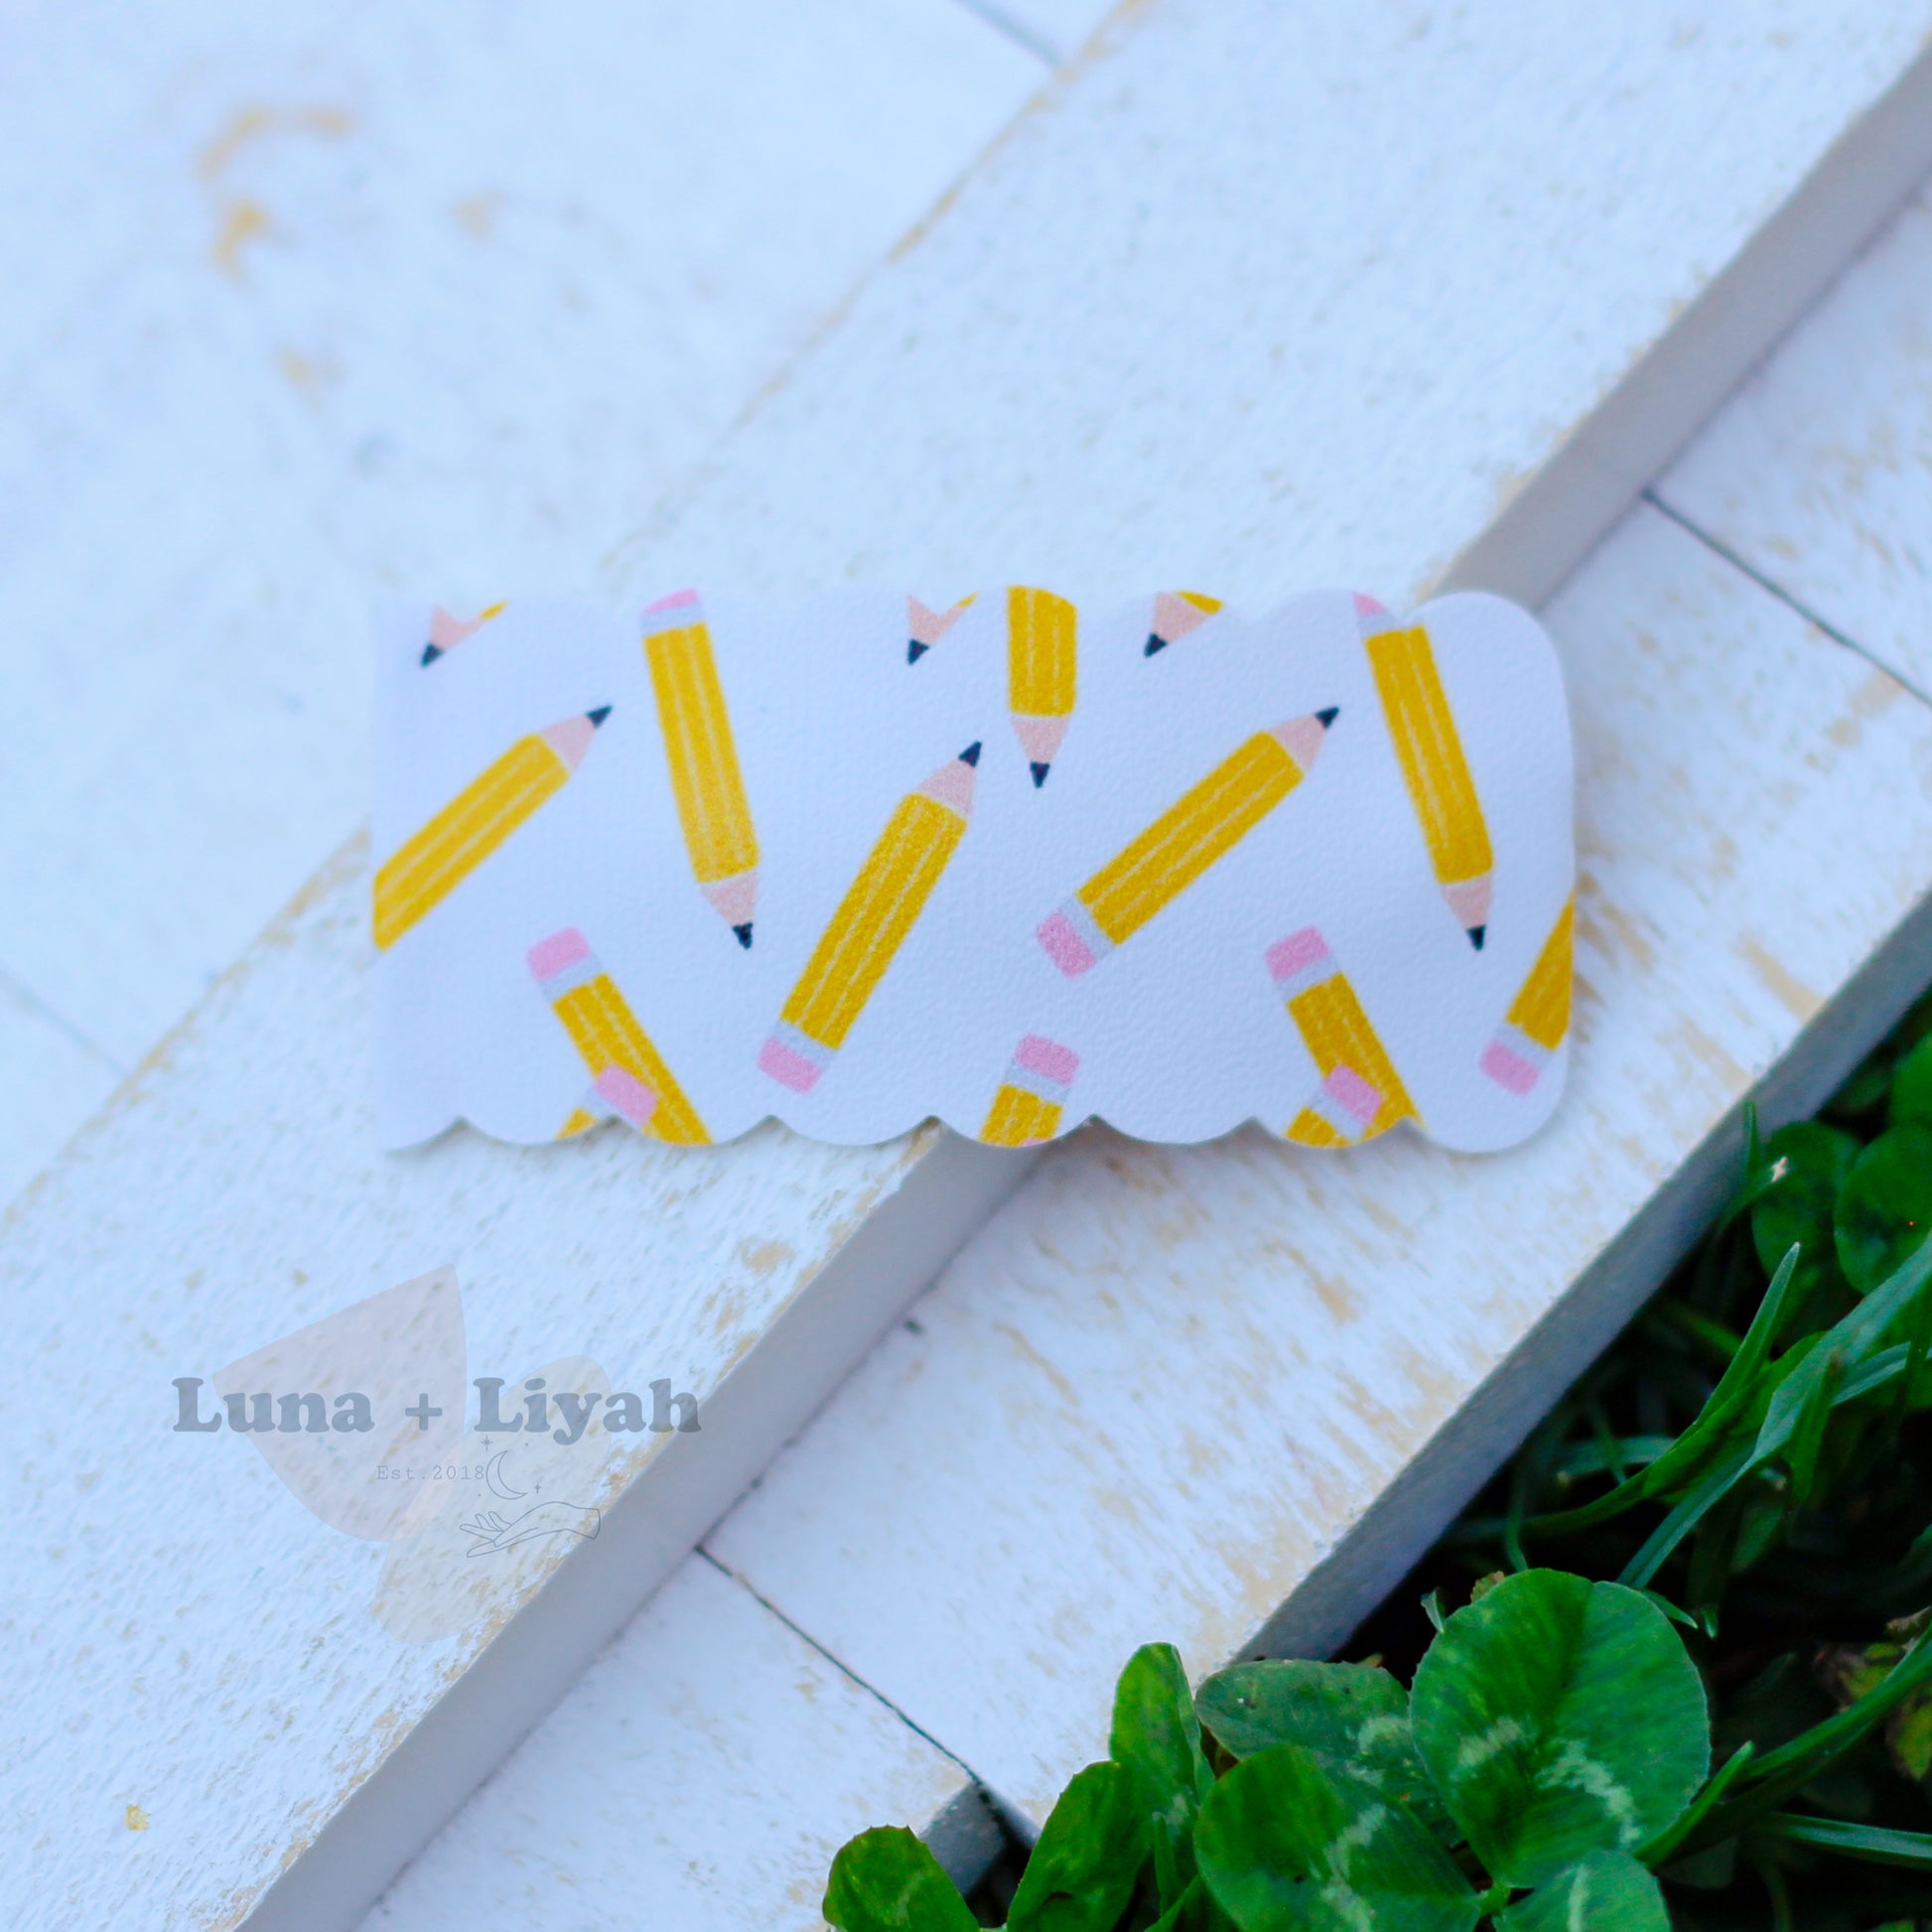 snap clip - yellow pencils